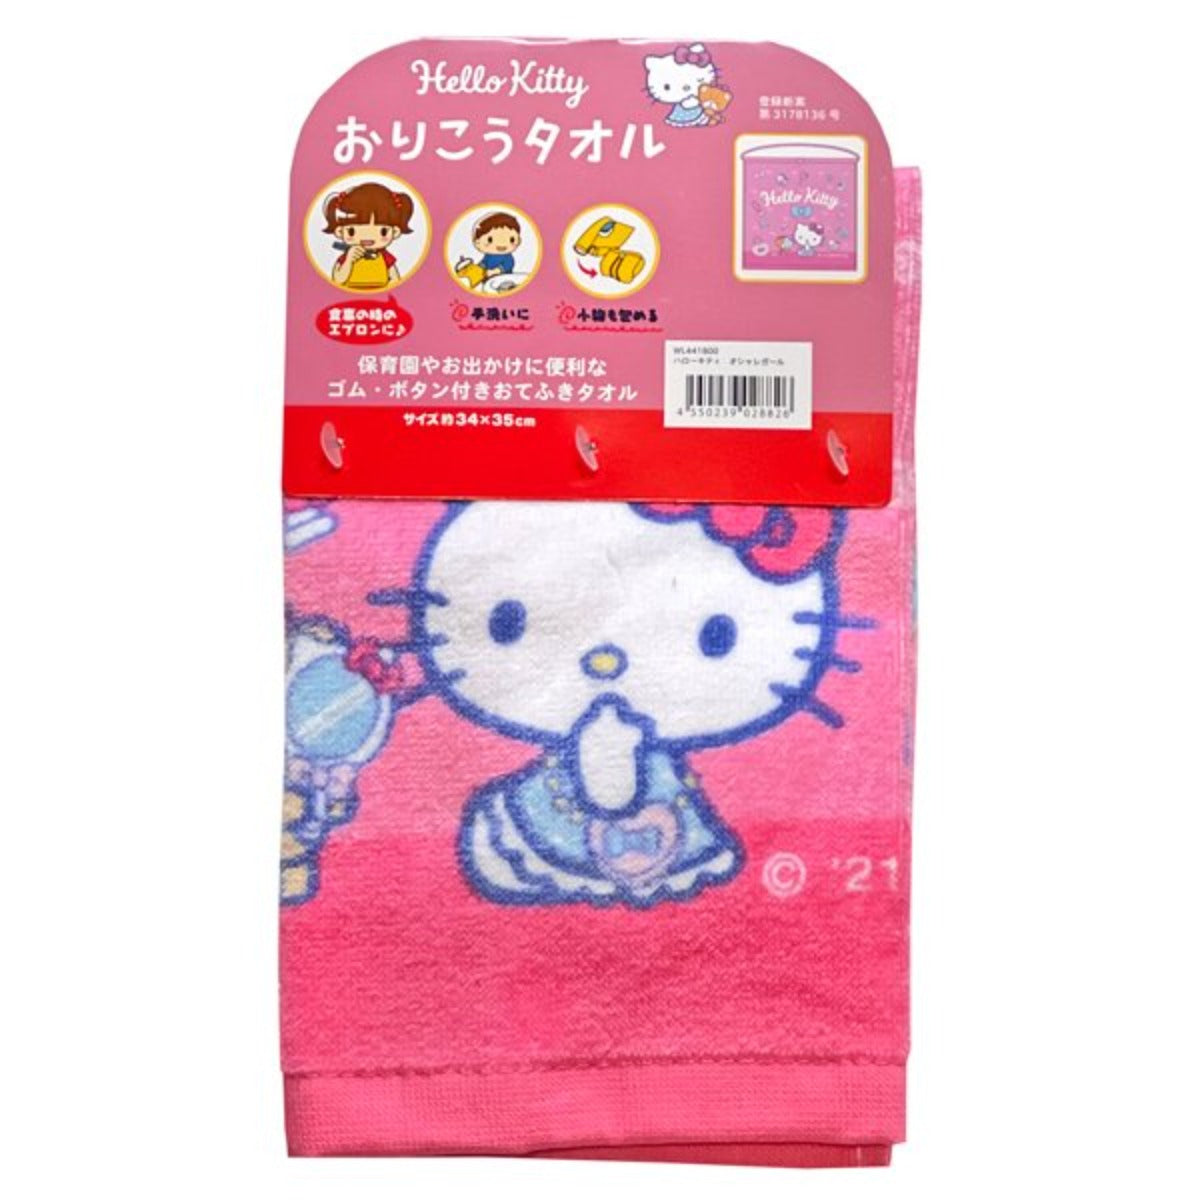 Towel - Sanrio Hello Kitty Multi-F 34x35cm